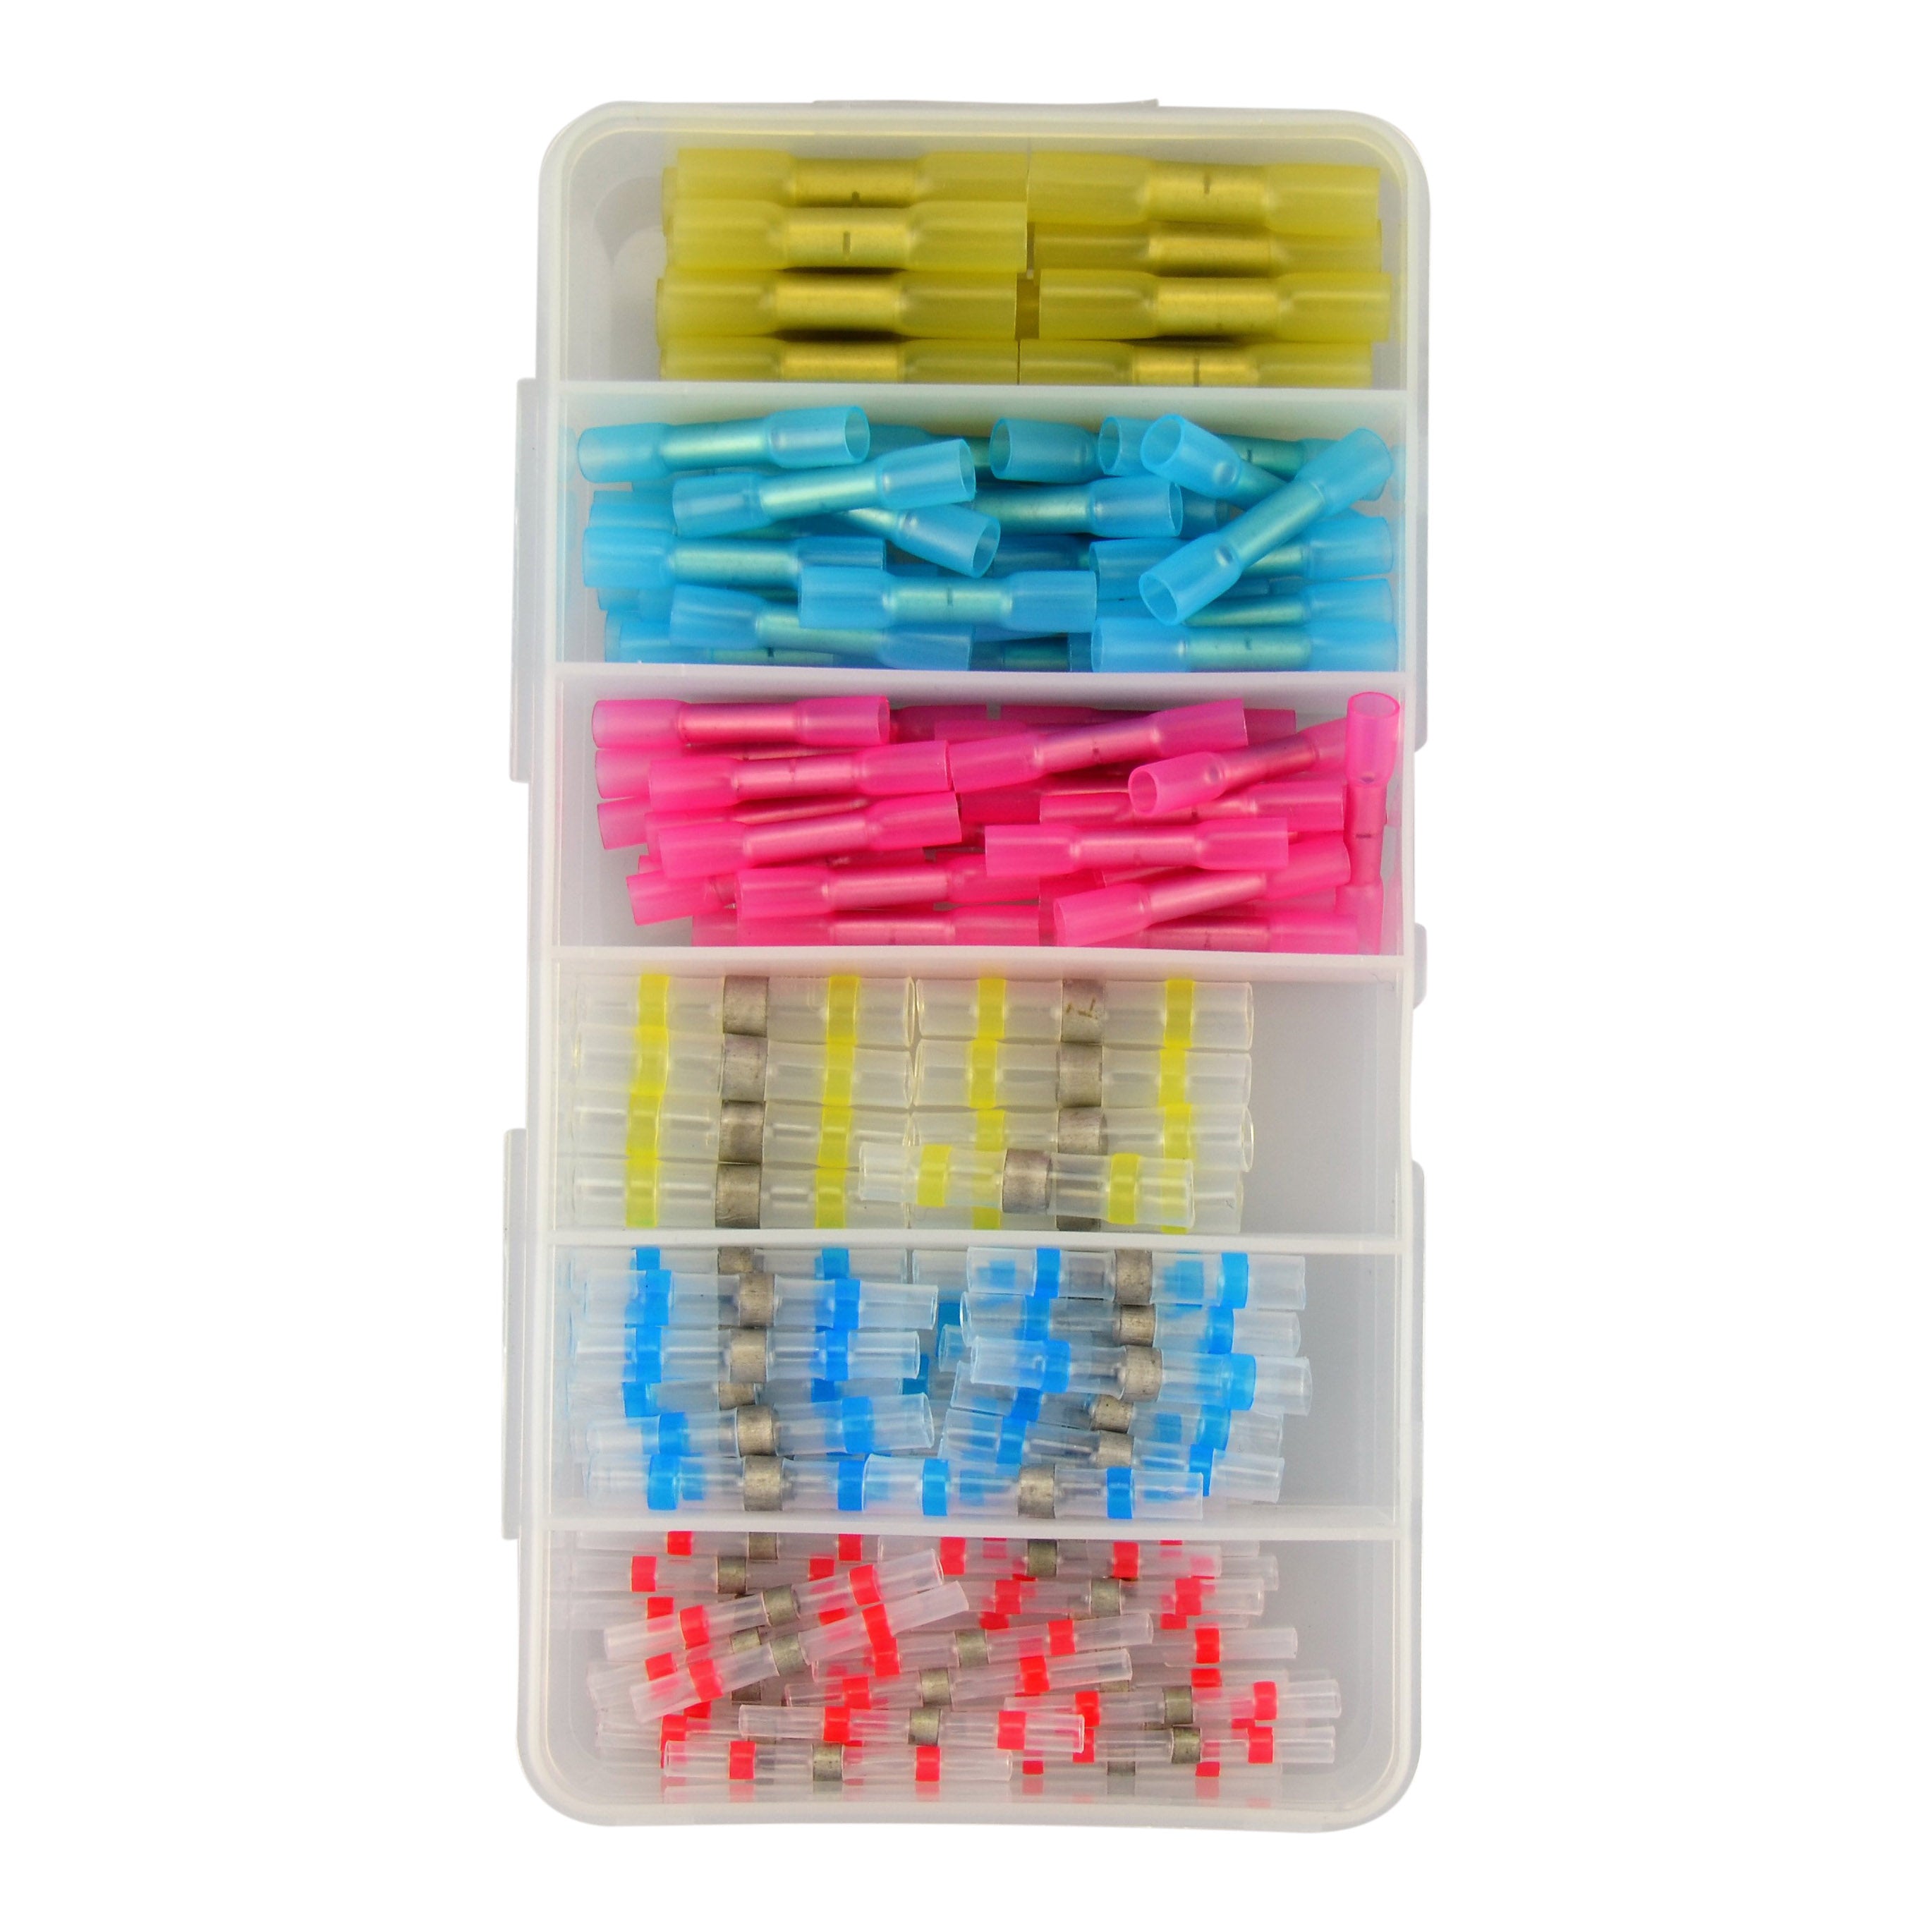 Red, Blue & Yellow Heatshrink & Solder Butt Connector Assortment Kit - 150pcs Total